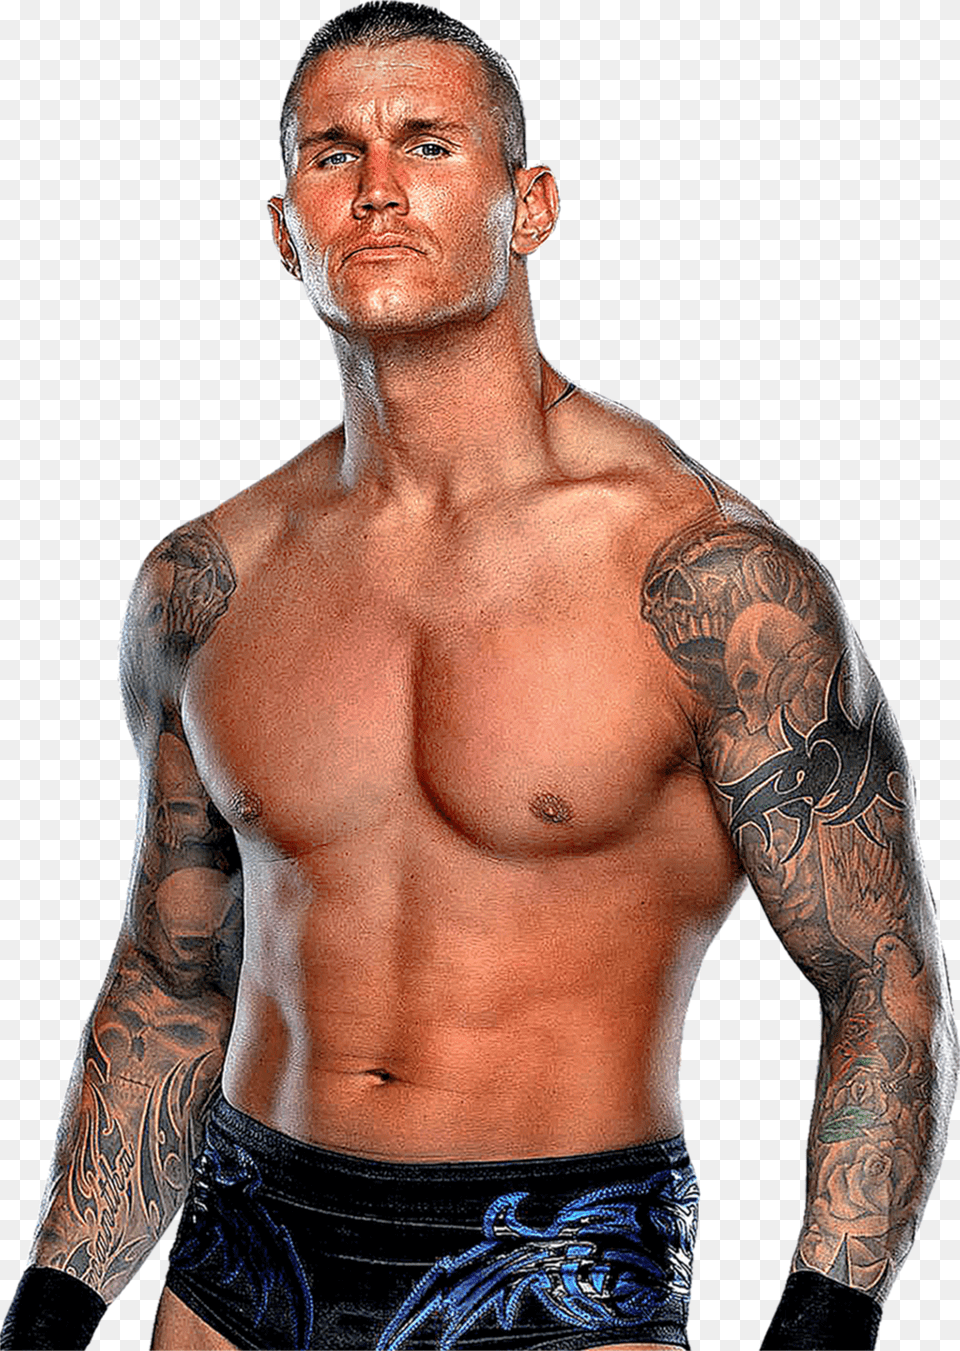 Randy Orton Tattoo Wallpaper Hd 2016 Download Randy Orton Arm Tattoos, Person, Skin, Adult, Male Png Image